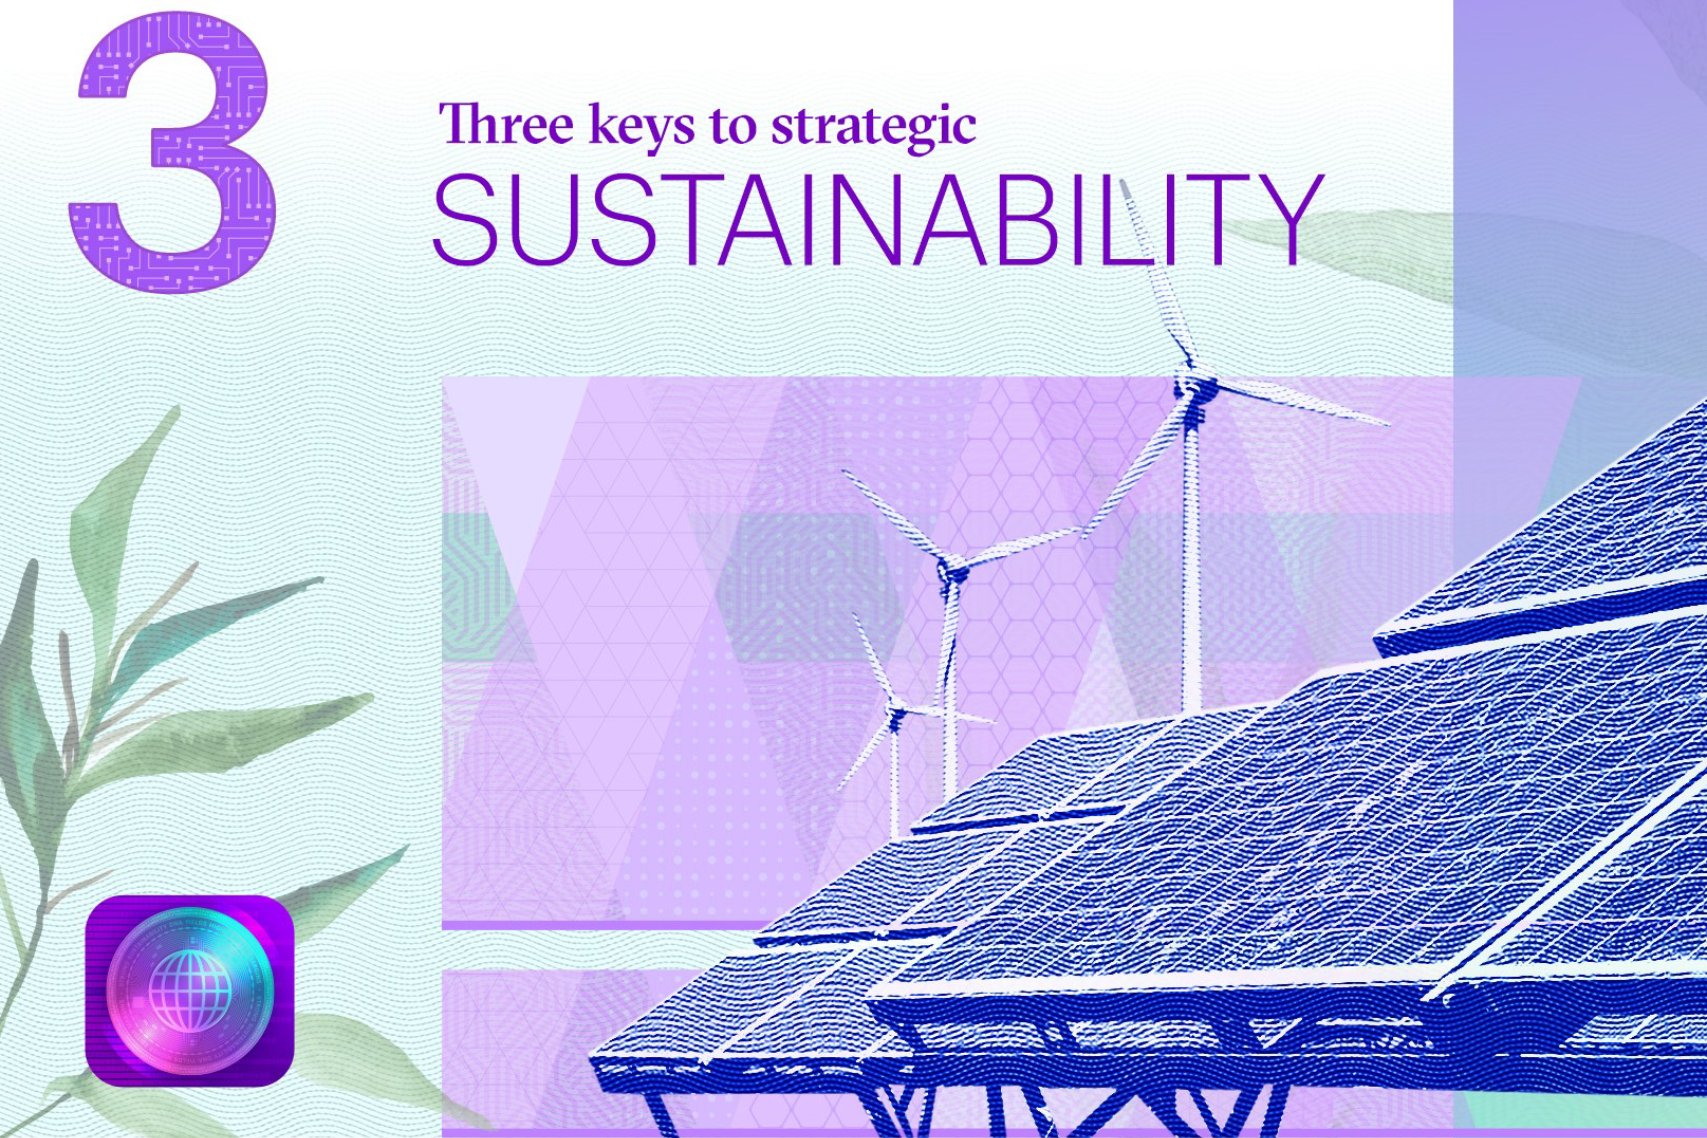 3. Three keys to strategic sustaintability.